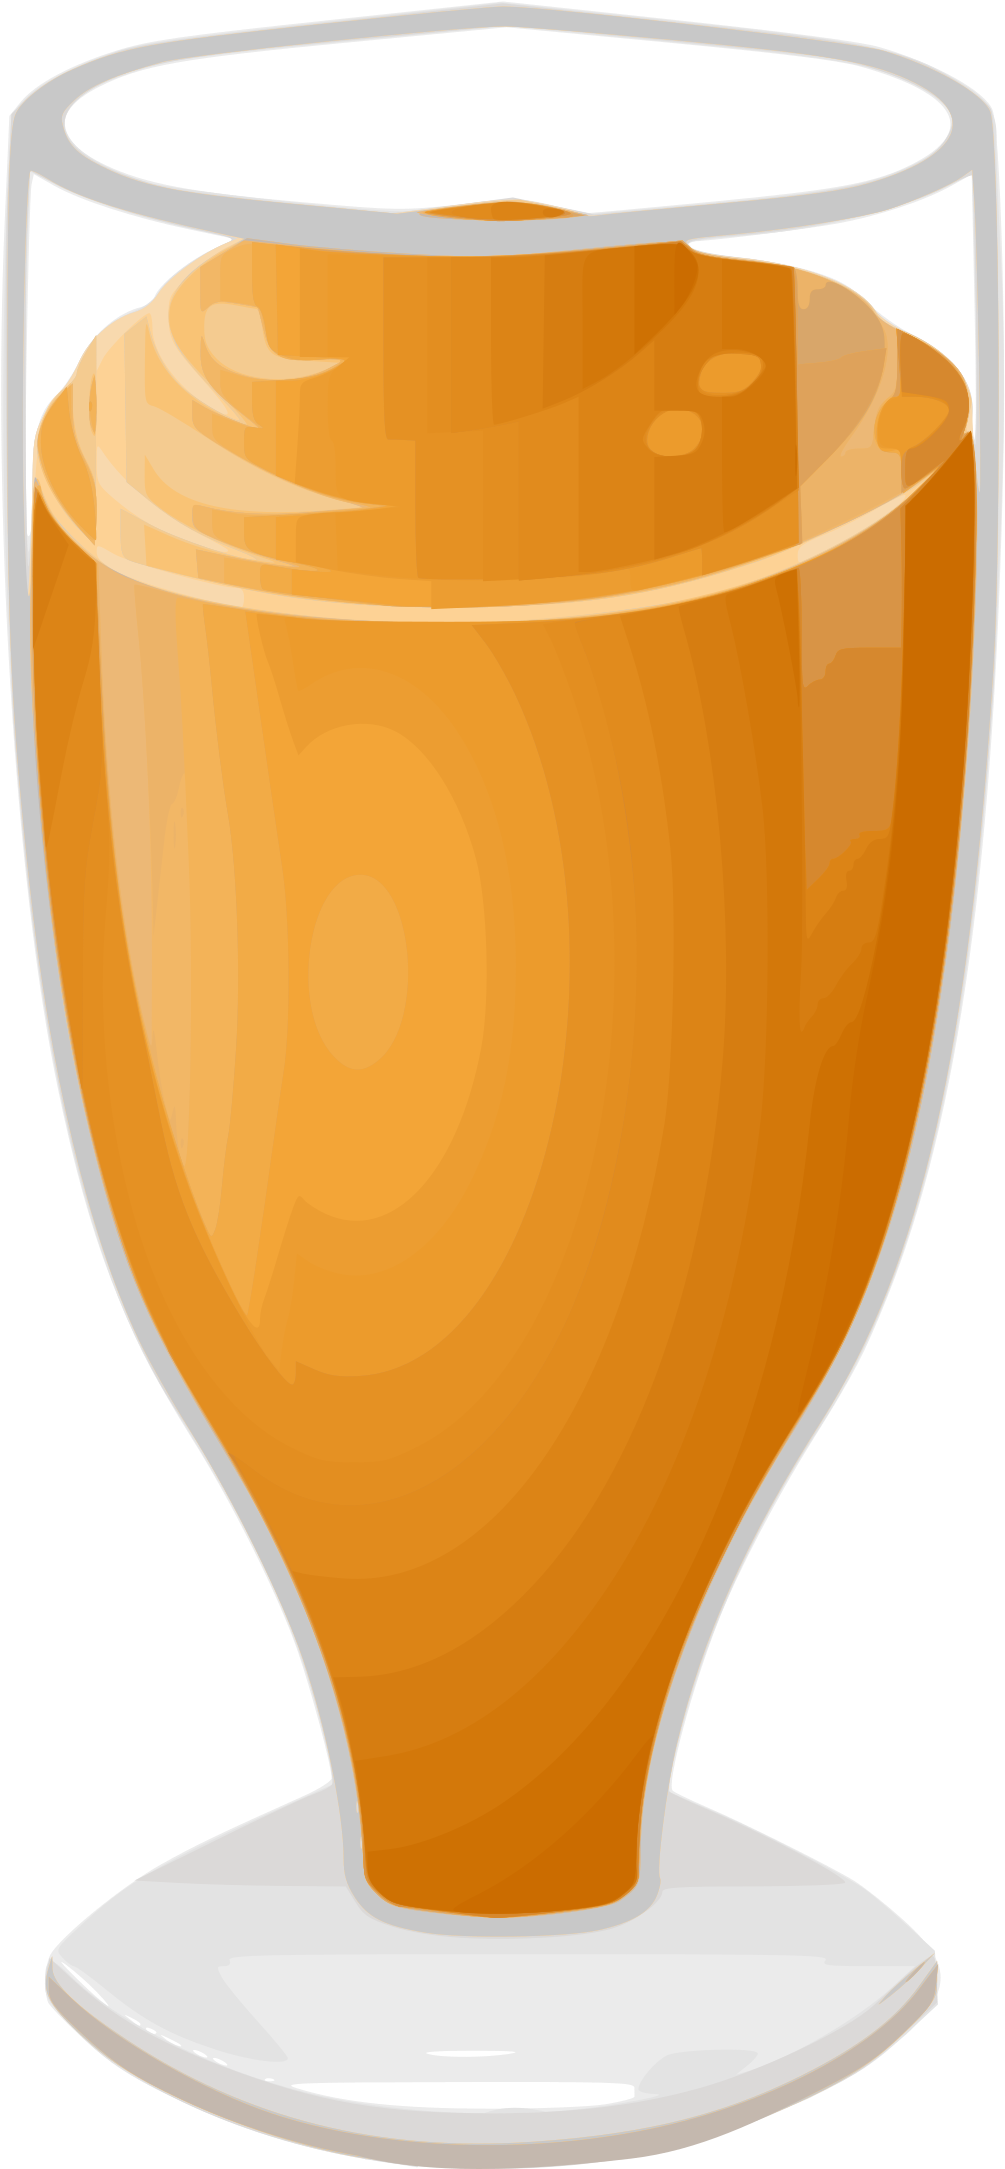 Orange Smoothie Glass Illustration